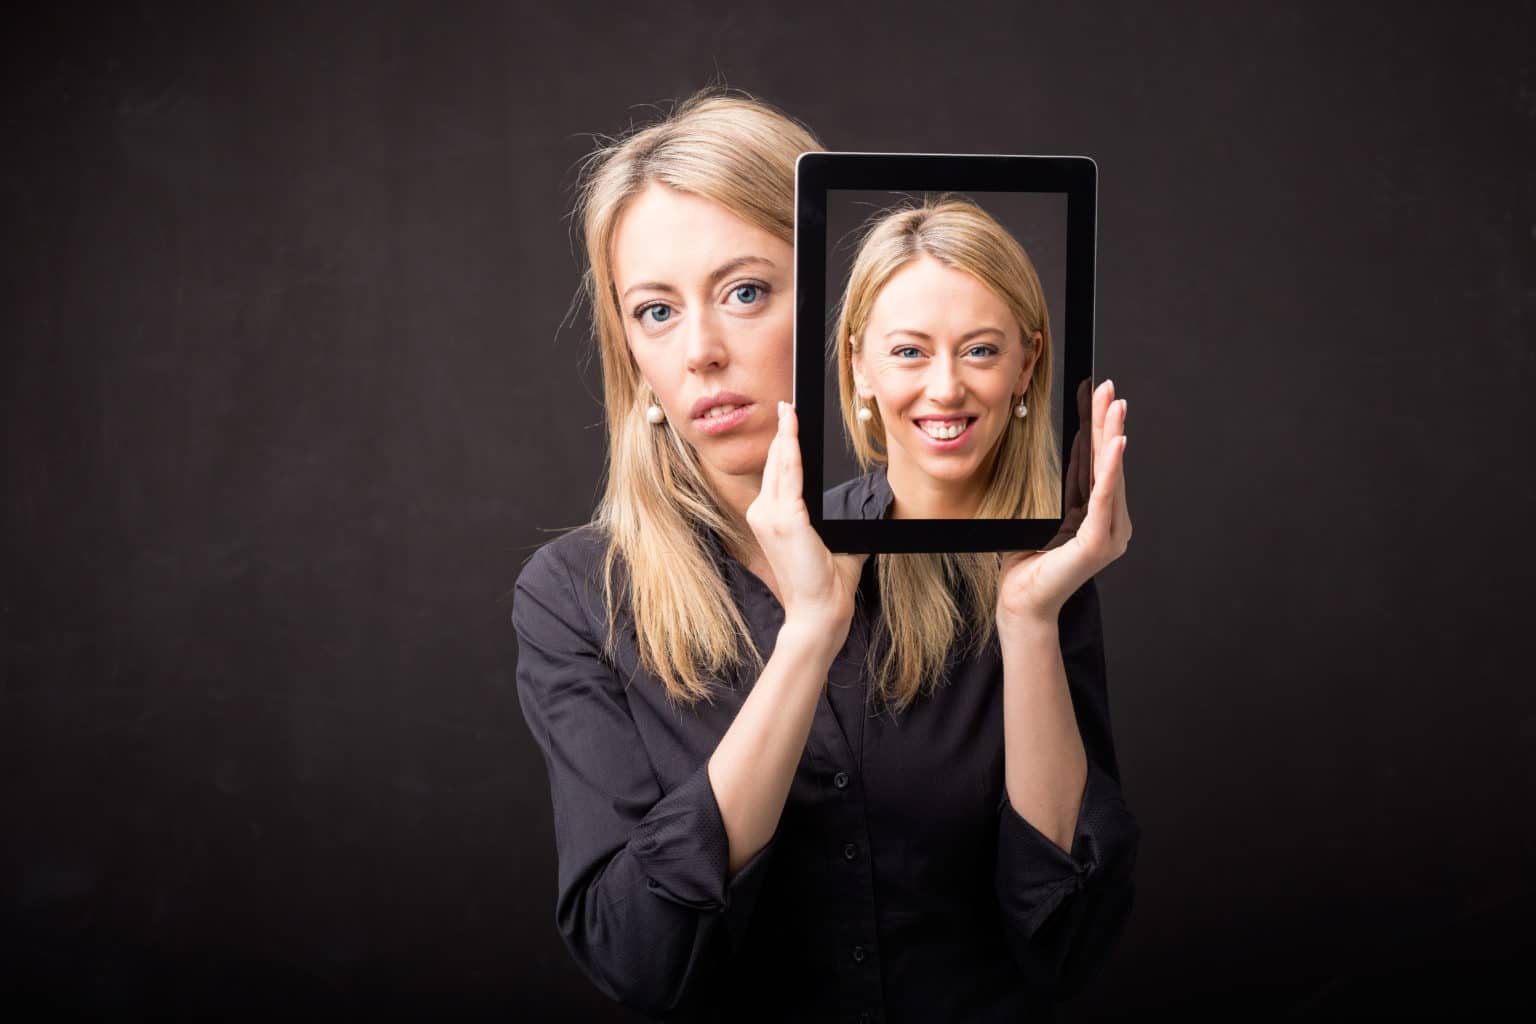 Woman showing happy portrait on tablet